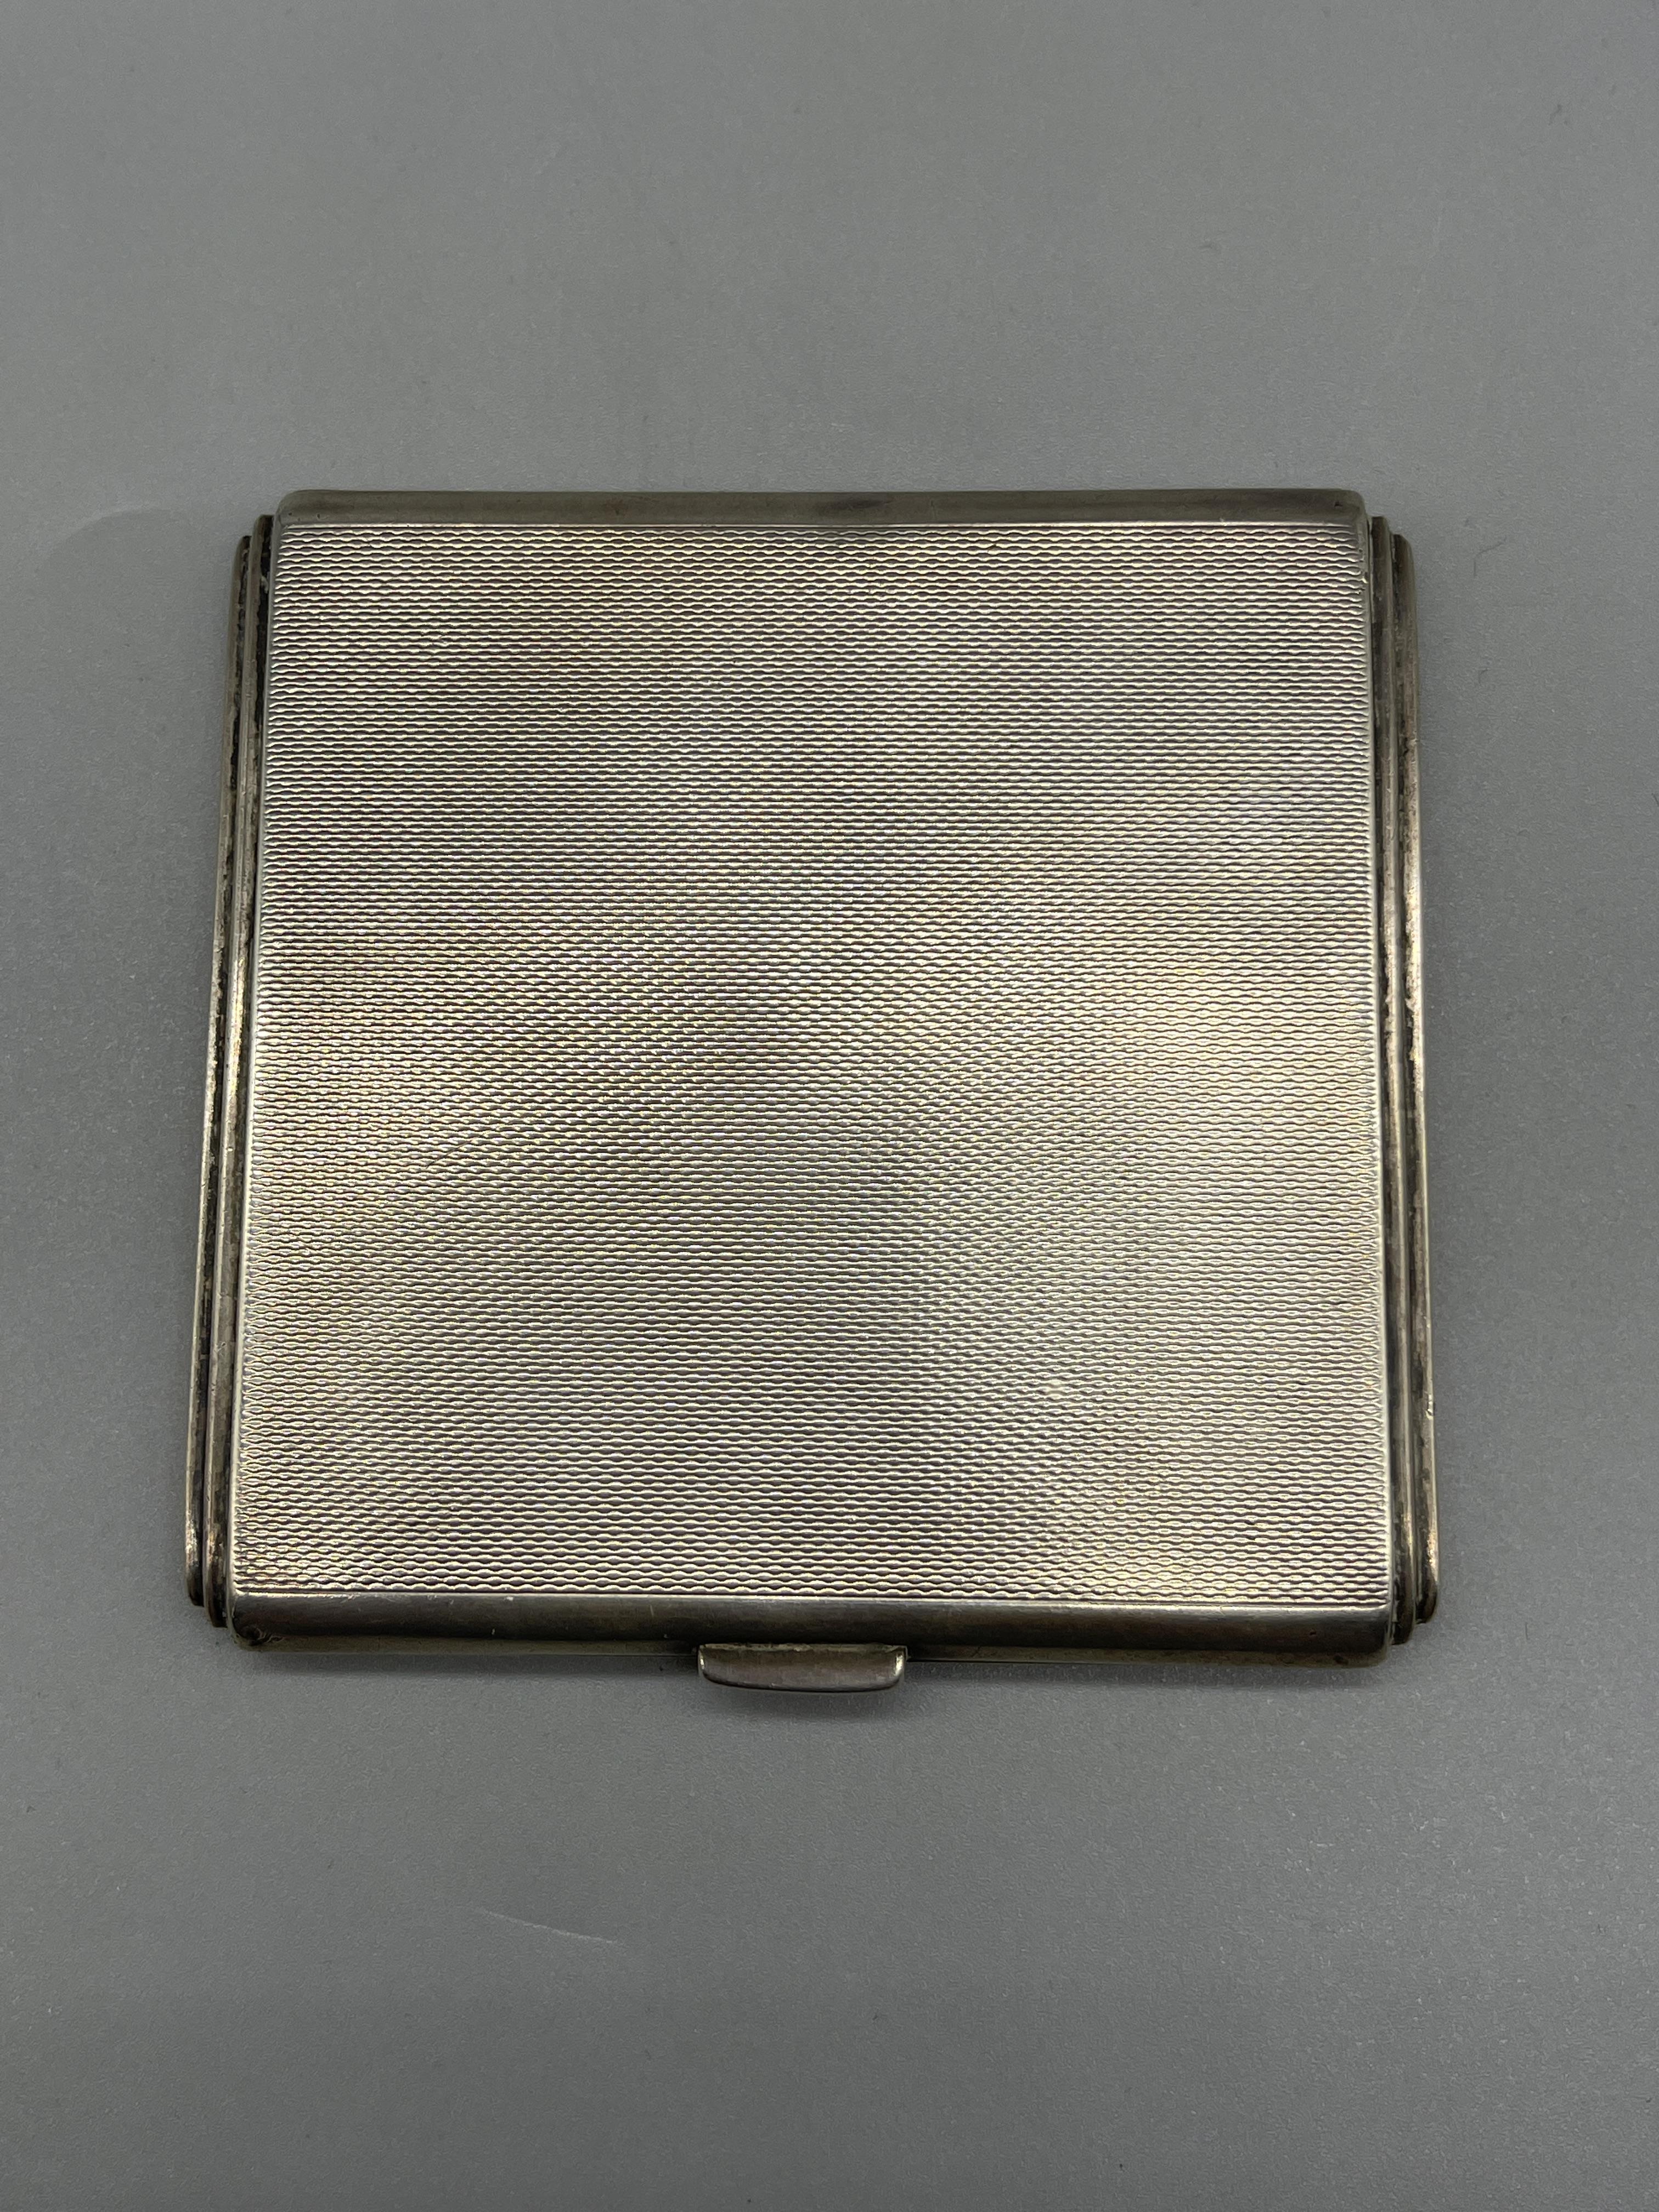 HM Silver cigarette case Birmingham, 1939 by D & F - Image 4 of 4